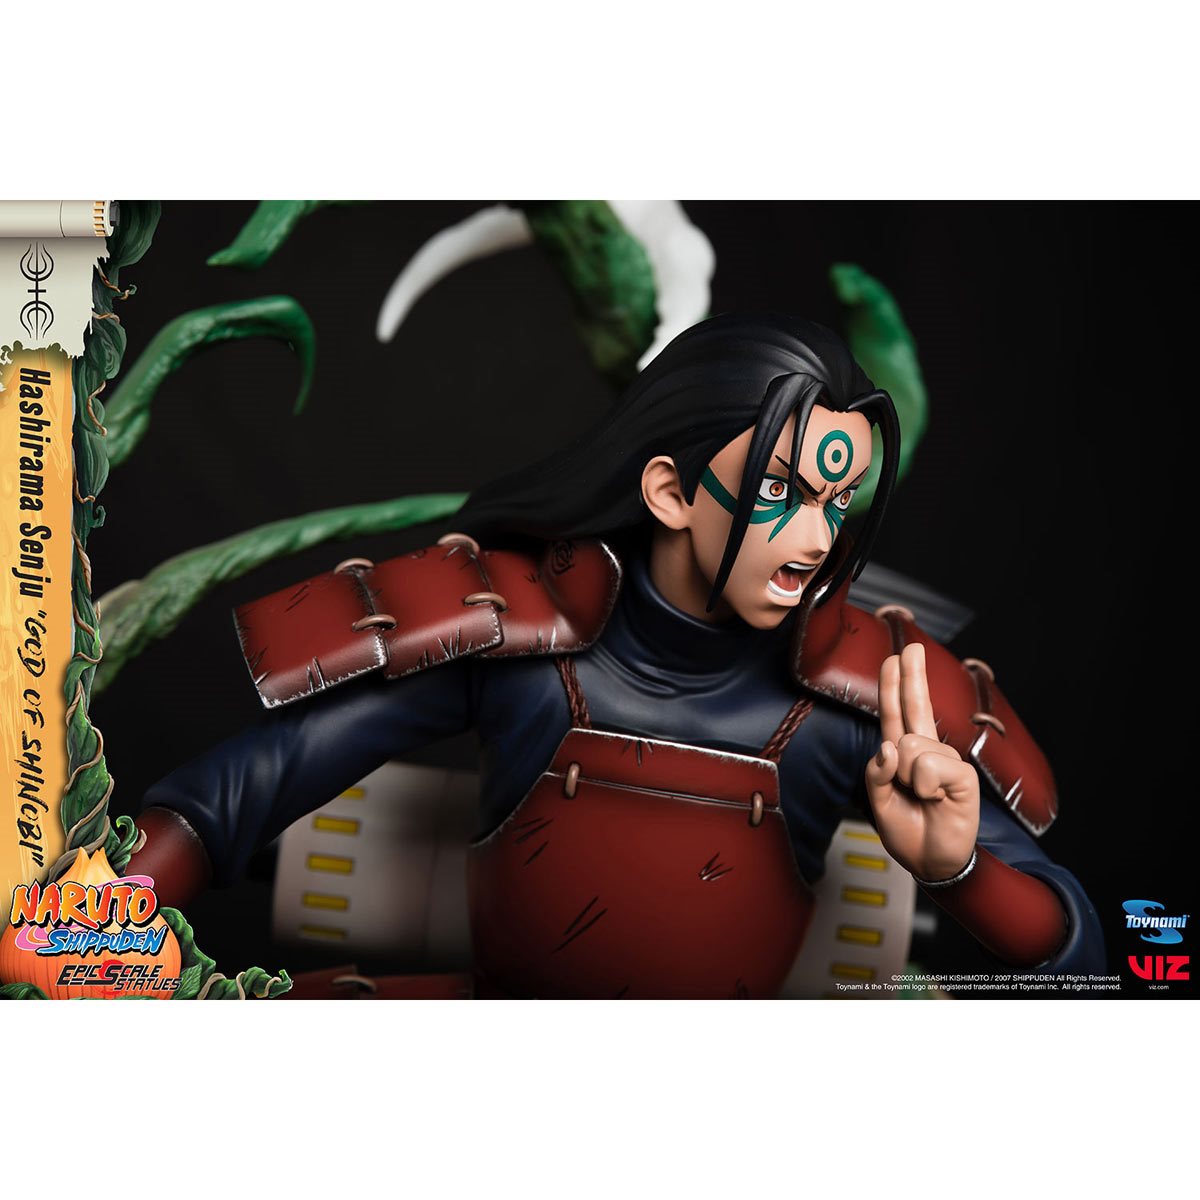 Naruto Shippuden - God of Shinobi Hashirama Senju Epic Scale Limited Edition 1:6 Scale Statue